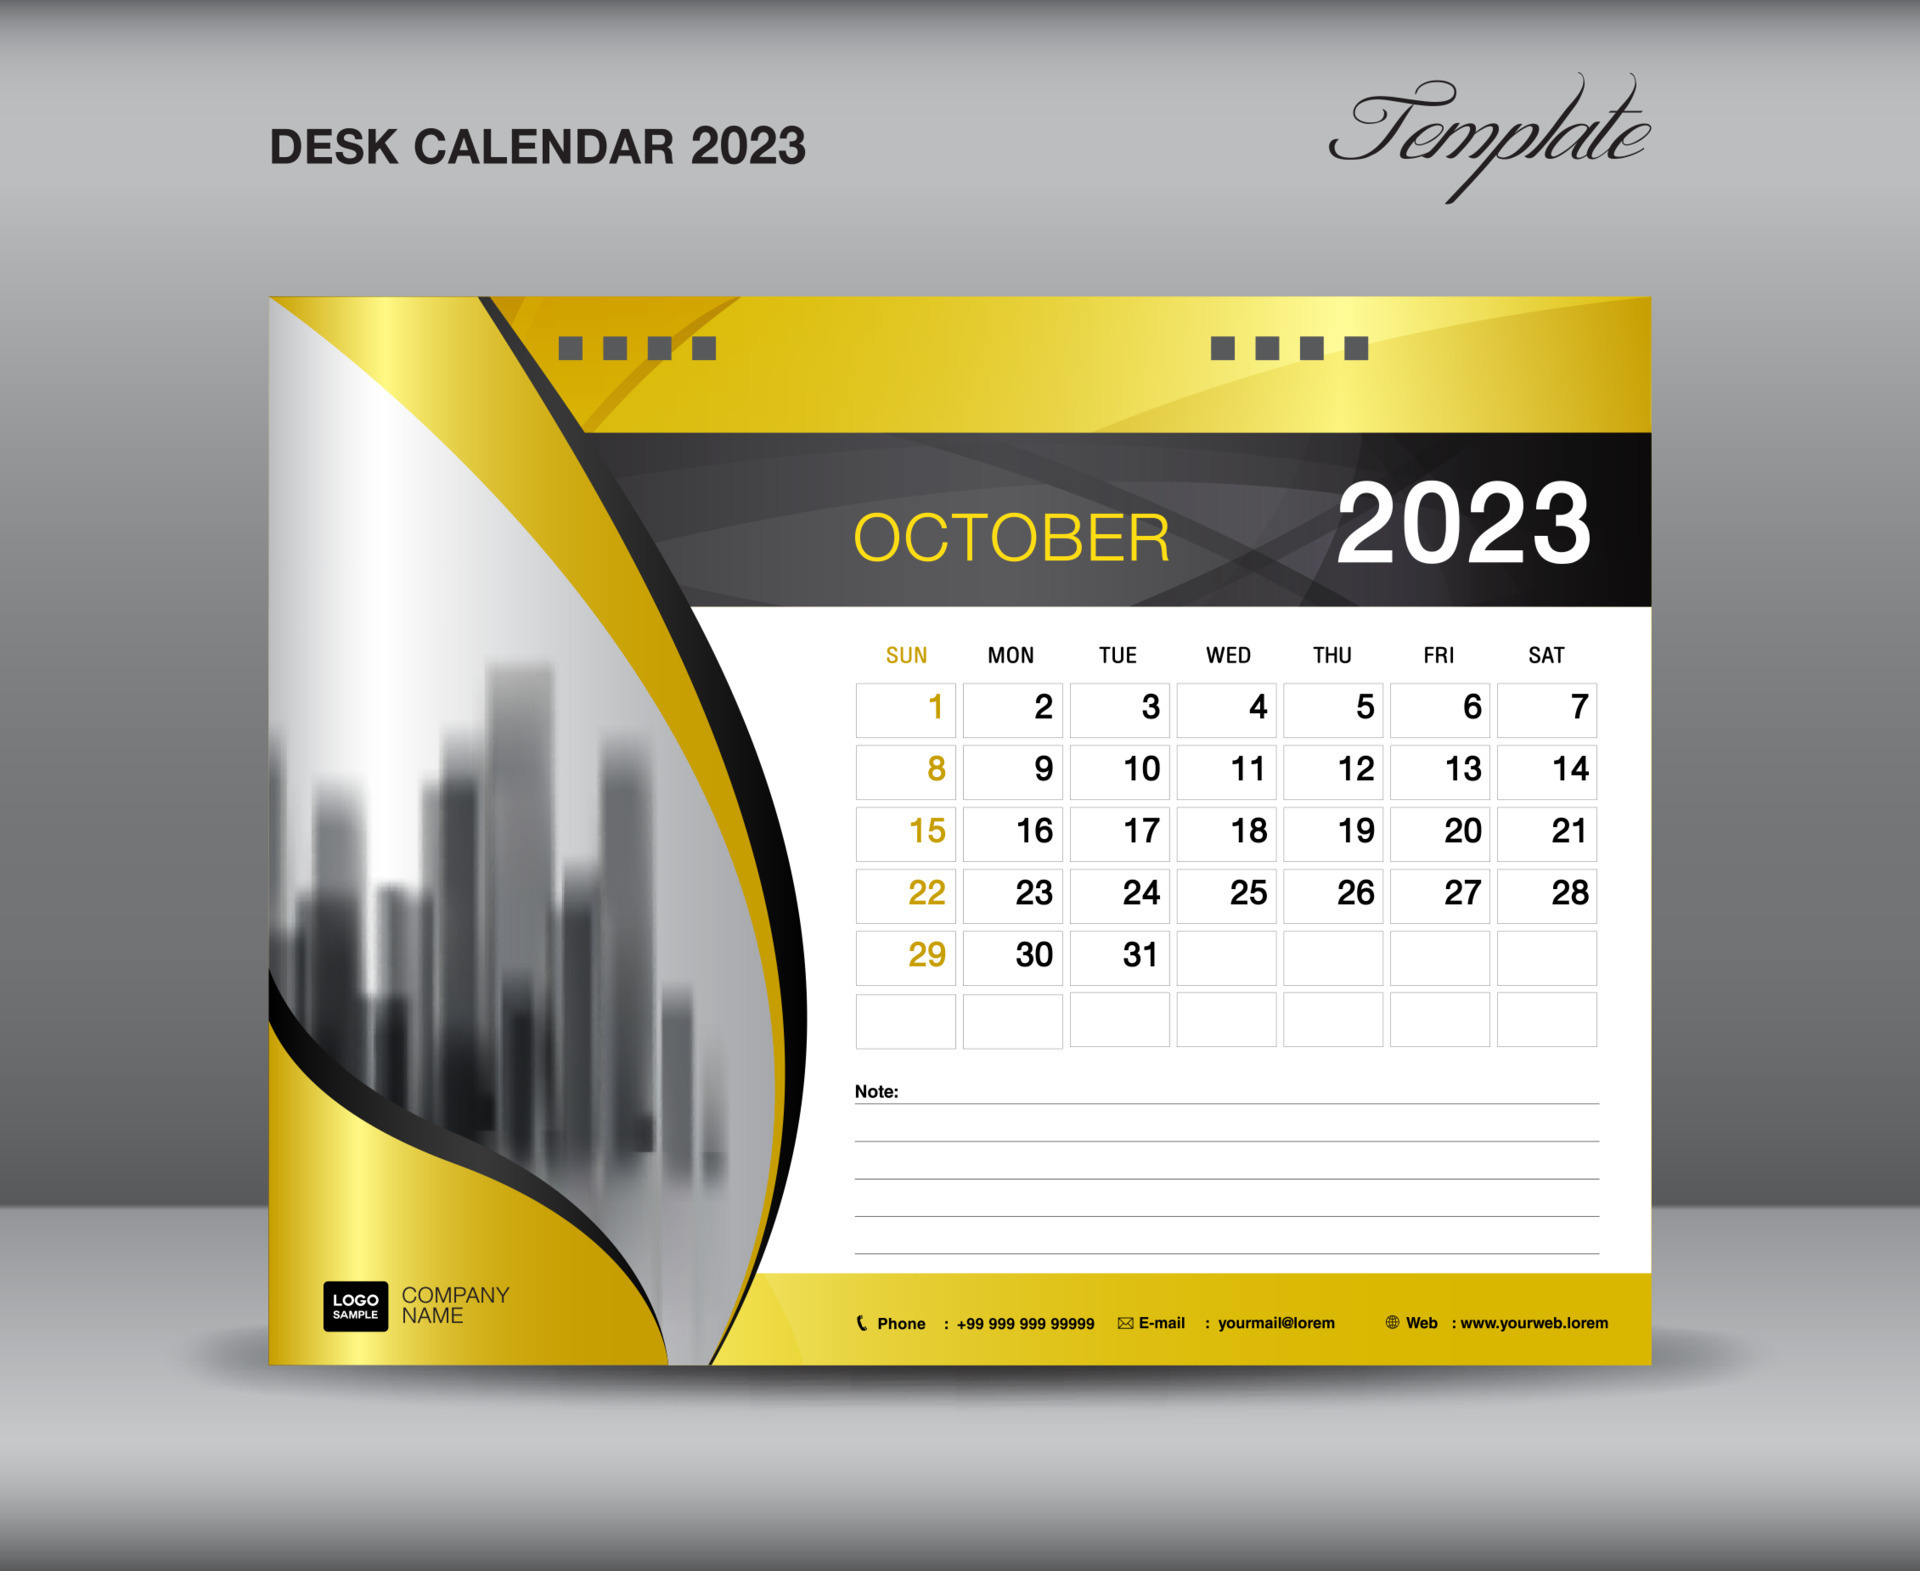 Calendrier 2023-2024 - Calendrier mural 15 mois d'octobre 2023 à